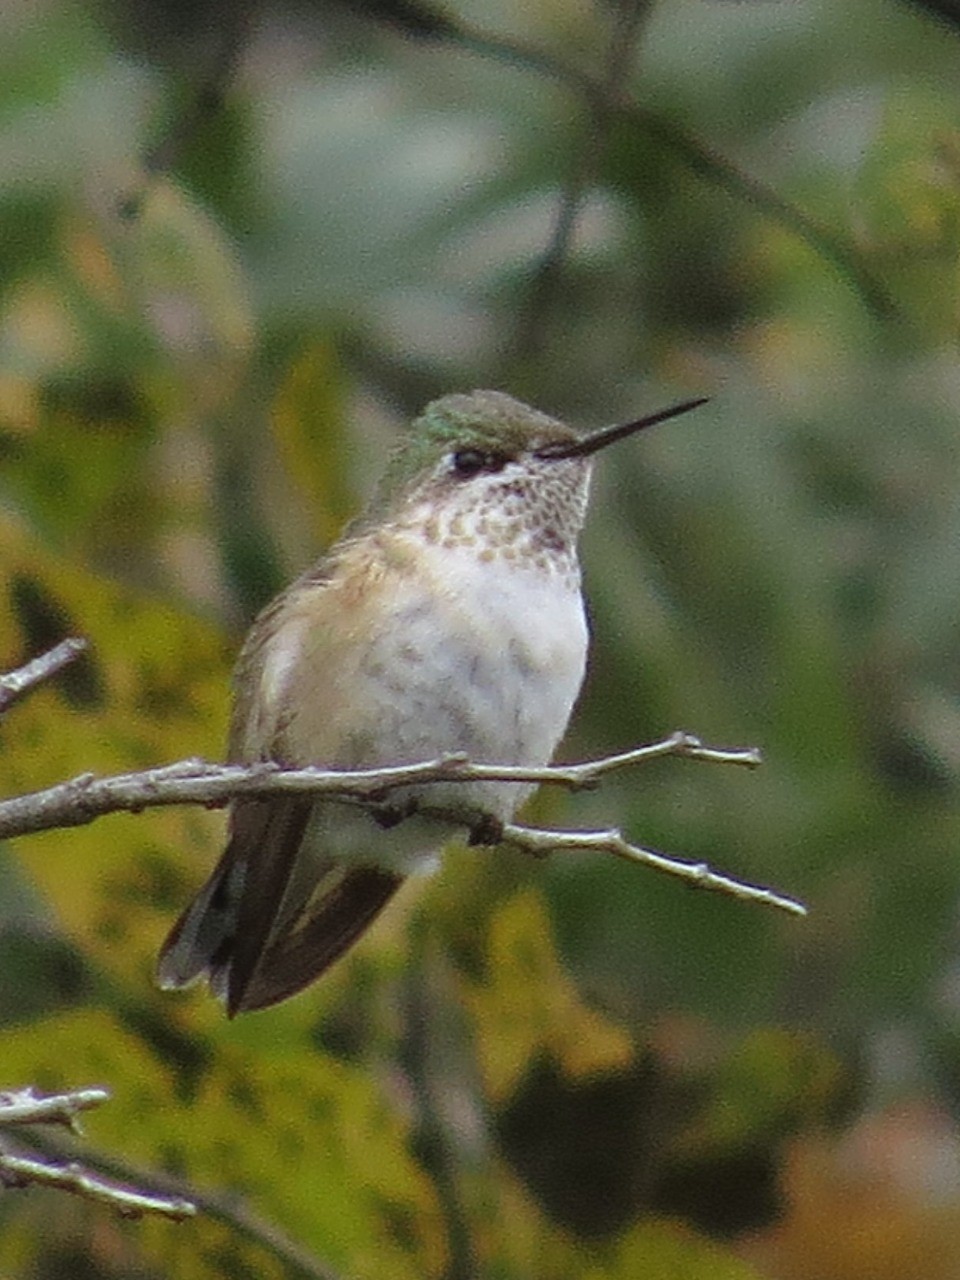 Calliope hummingbird perching on a branch.